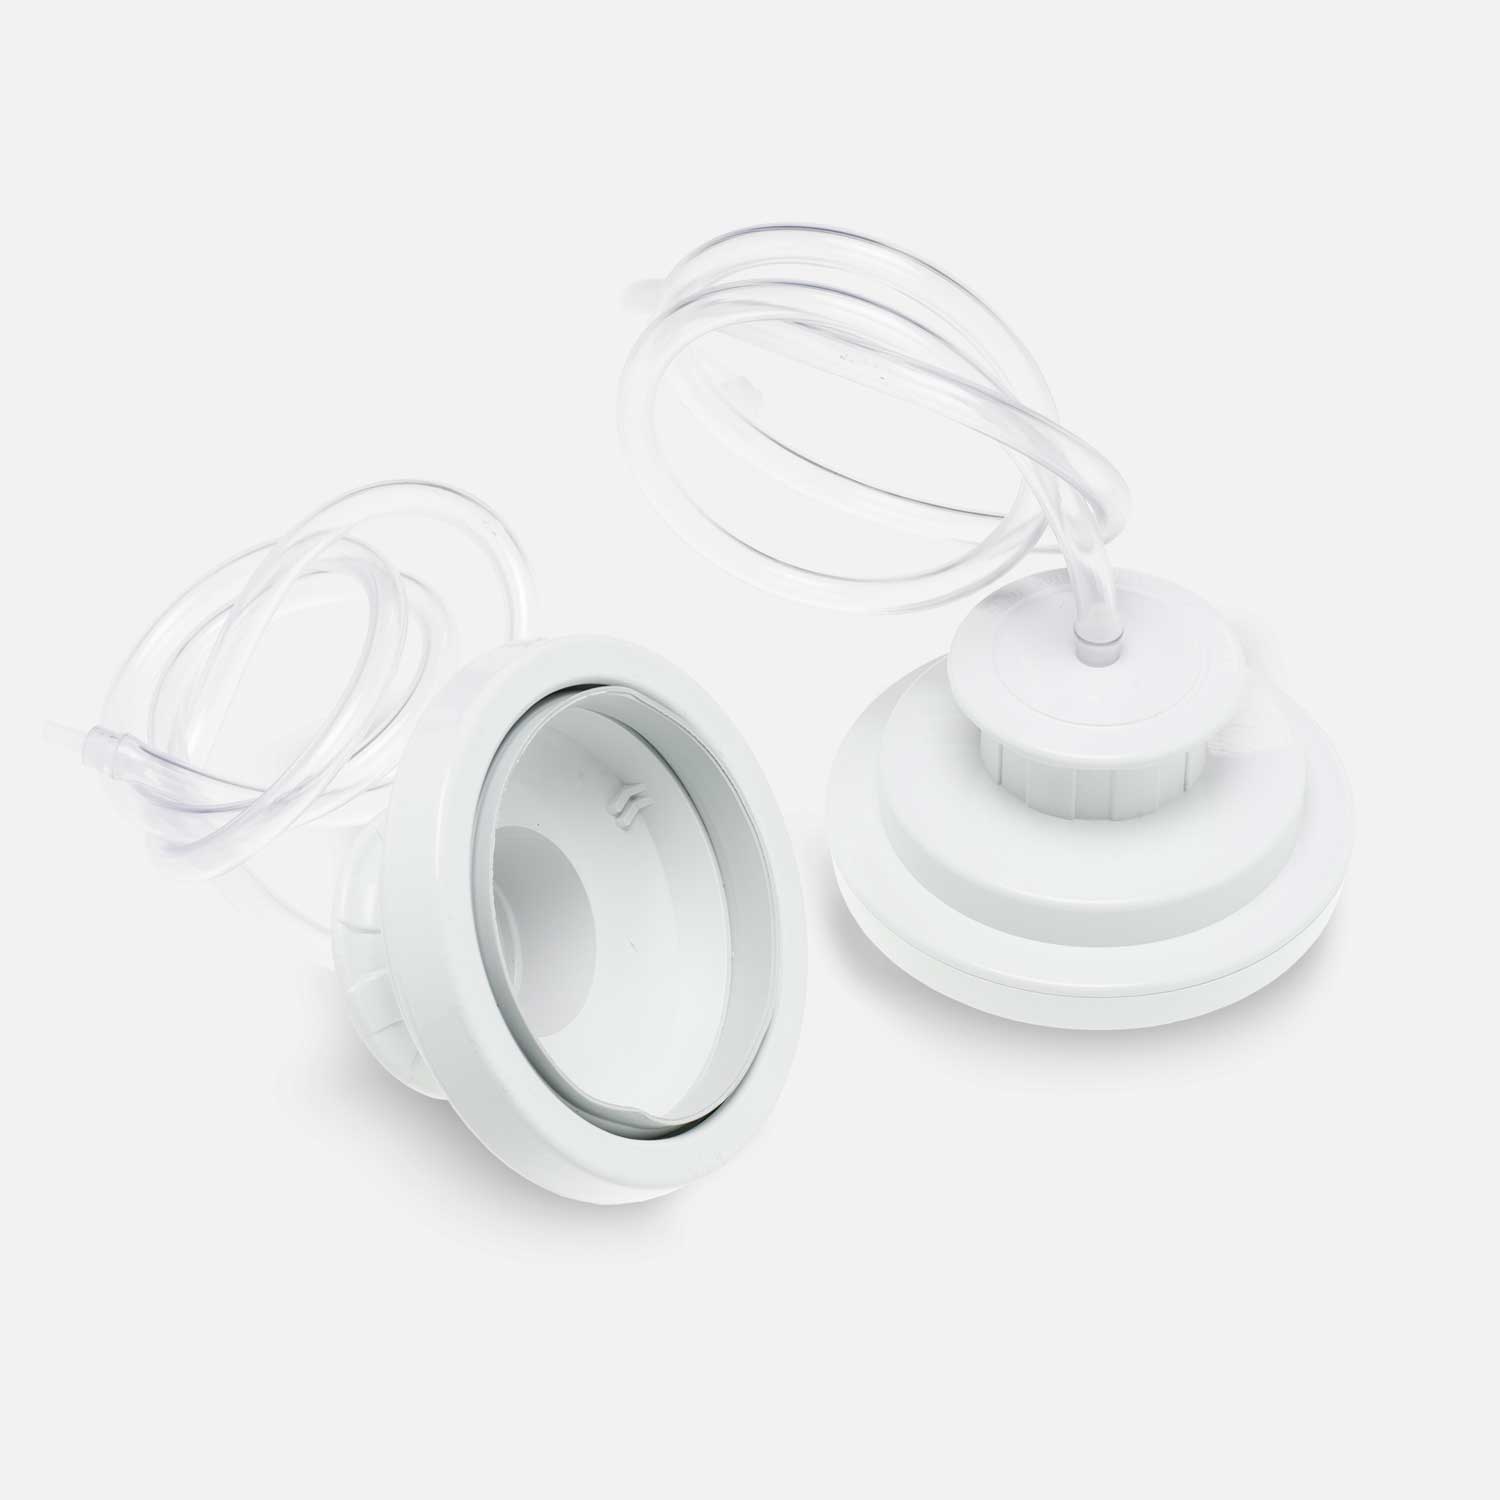 White vacuum sealer attachment for jars with a transparent hose